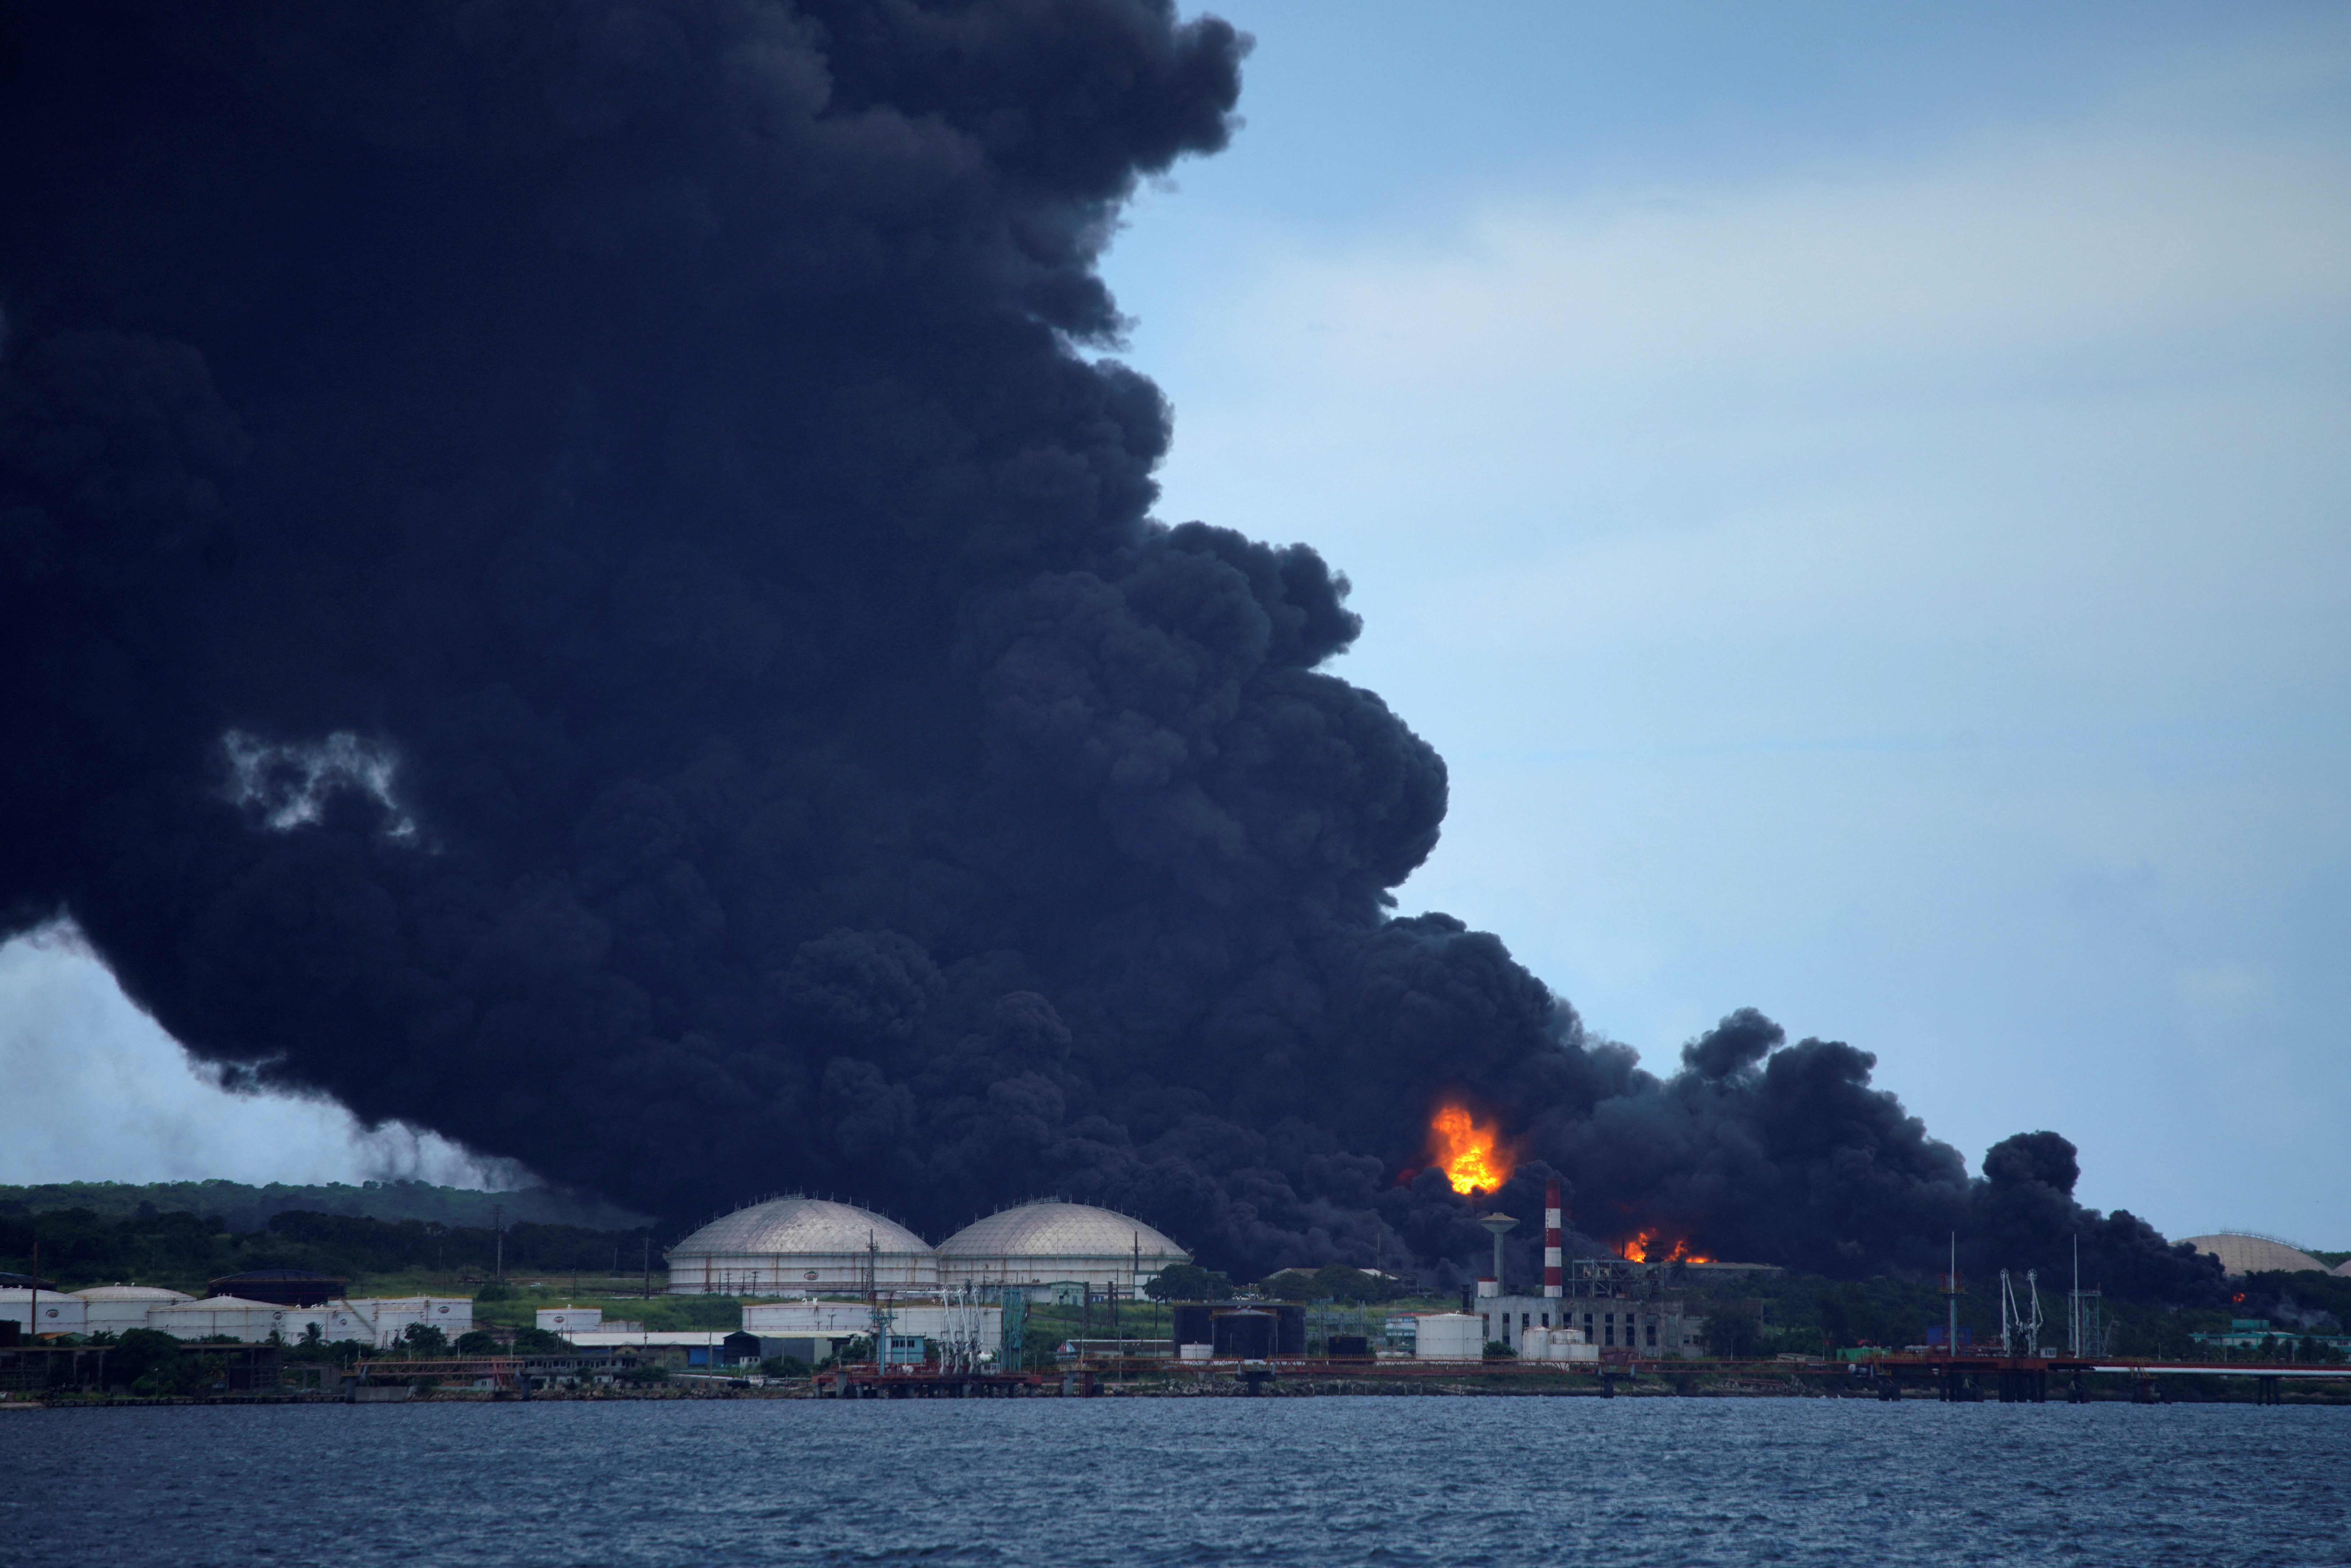 Fire is seen over fuel storage tanks that exploded near Cuba's supertanker port in Matanzas, Cuba, August 6, 2022. REUTERS/Alexandre Meneghini